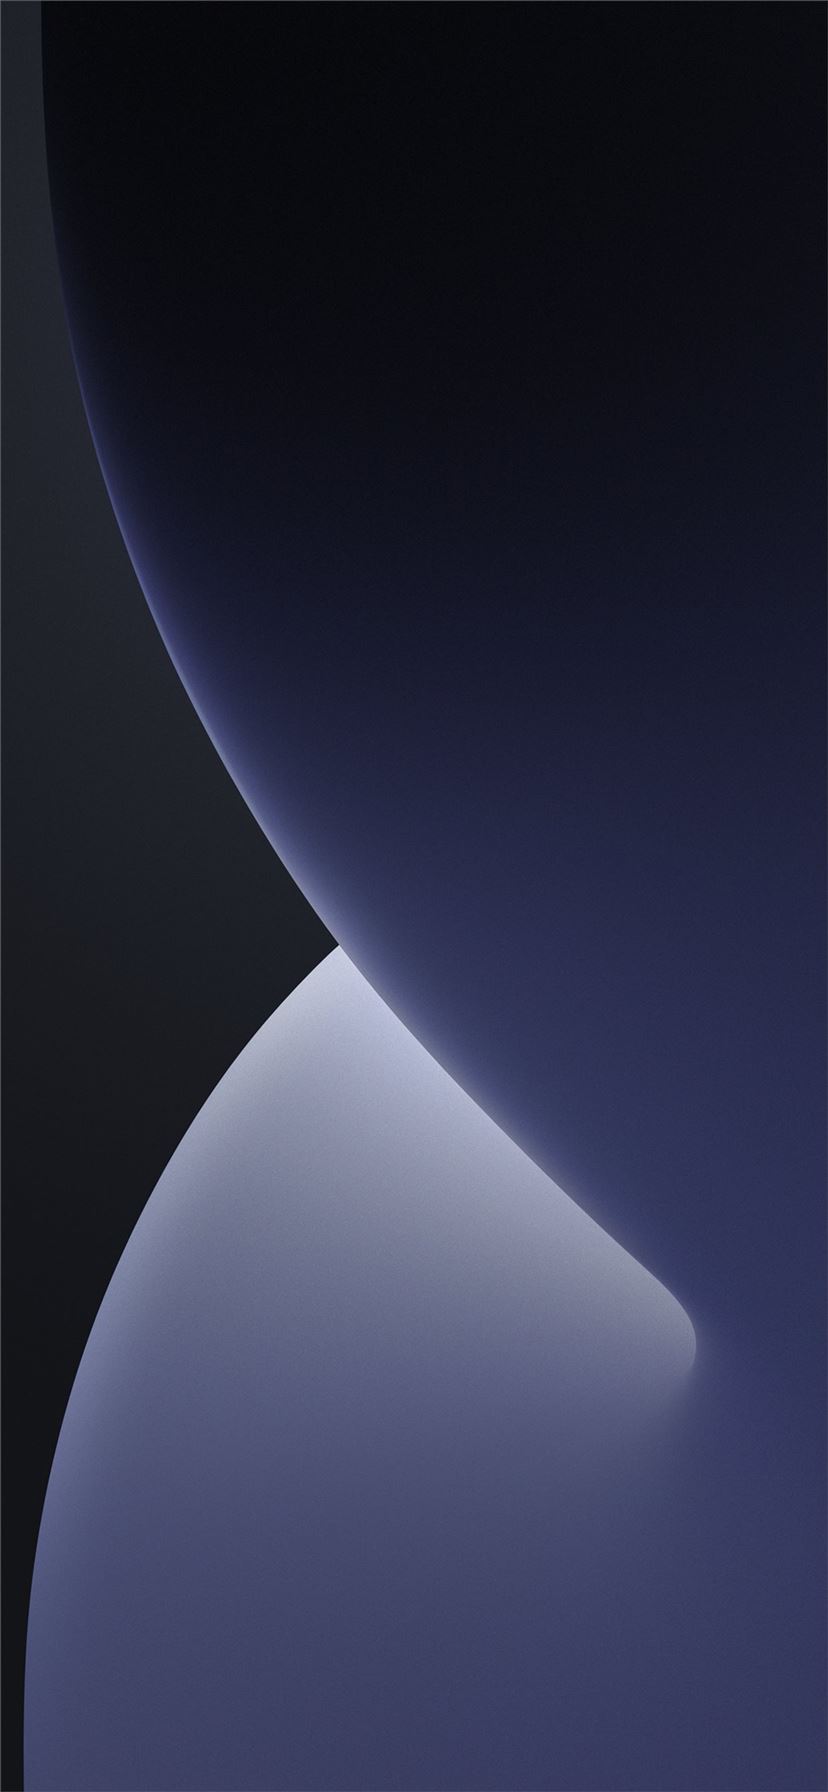  iOS  14  stock wallpaper  Neutral Dark iPhone  11 Wallpapers  